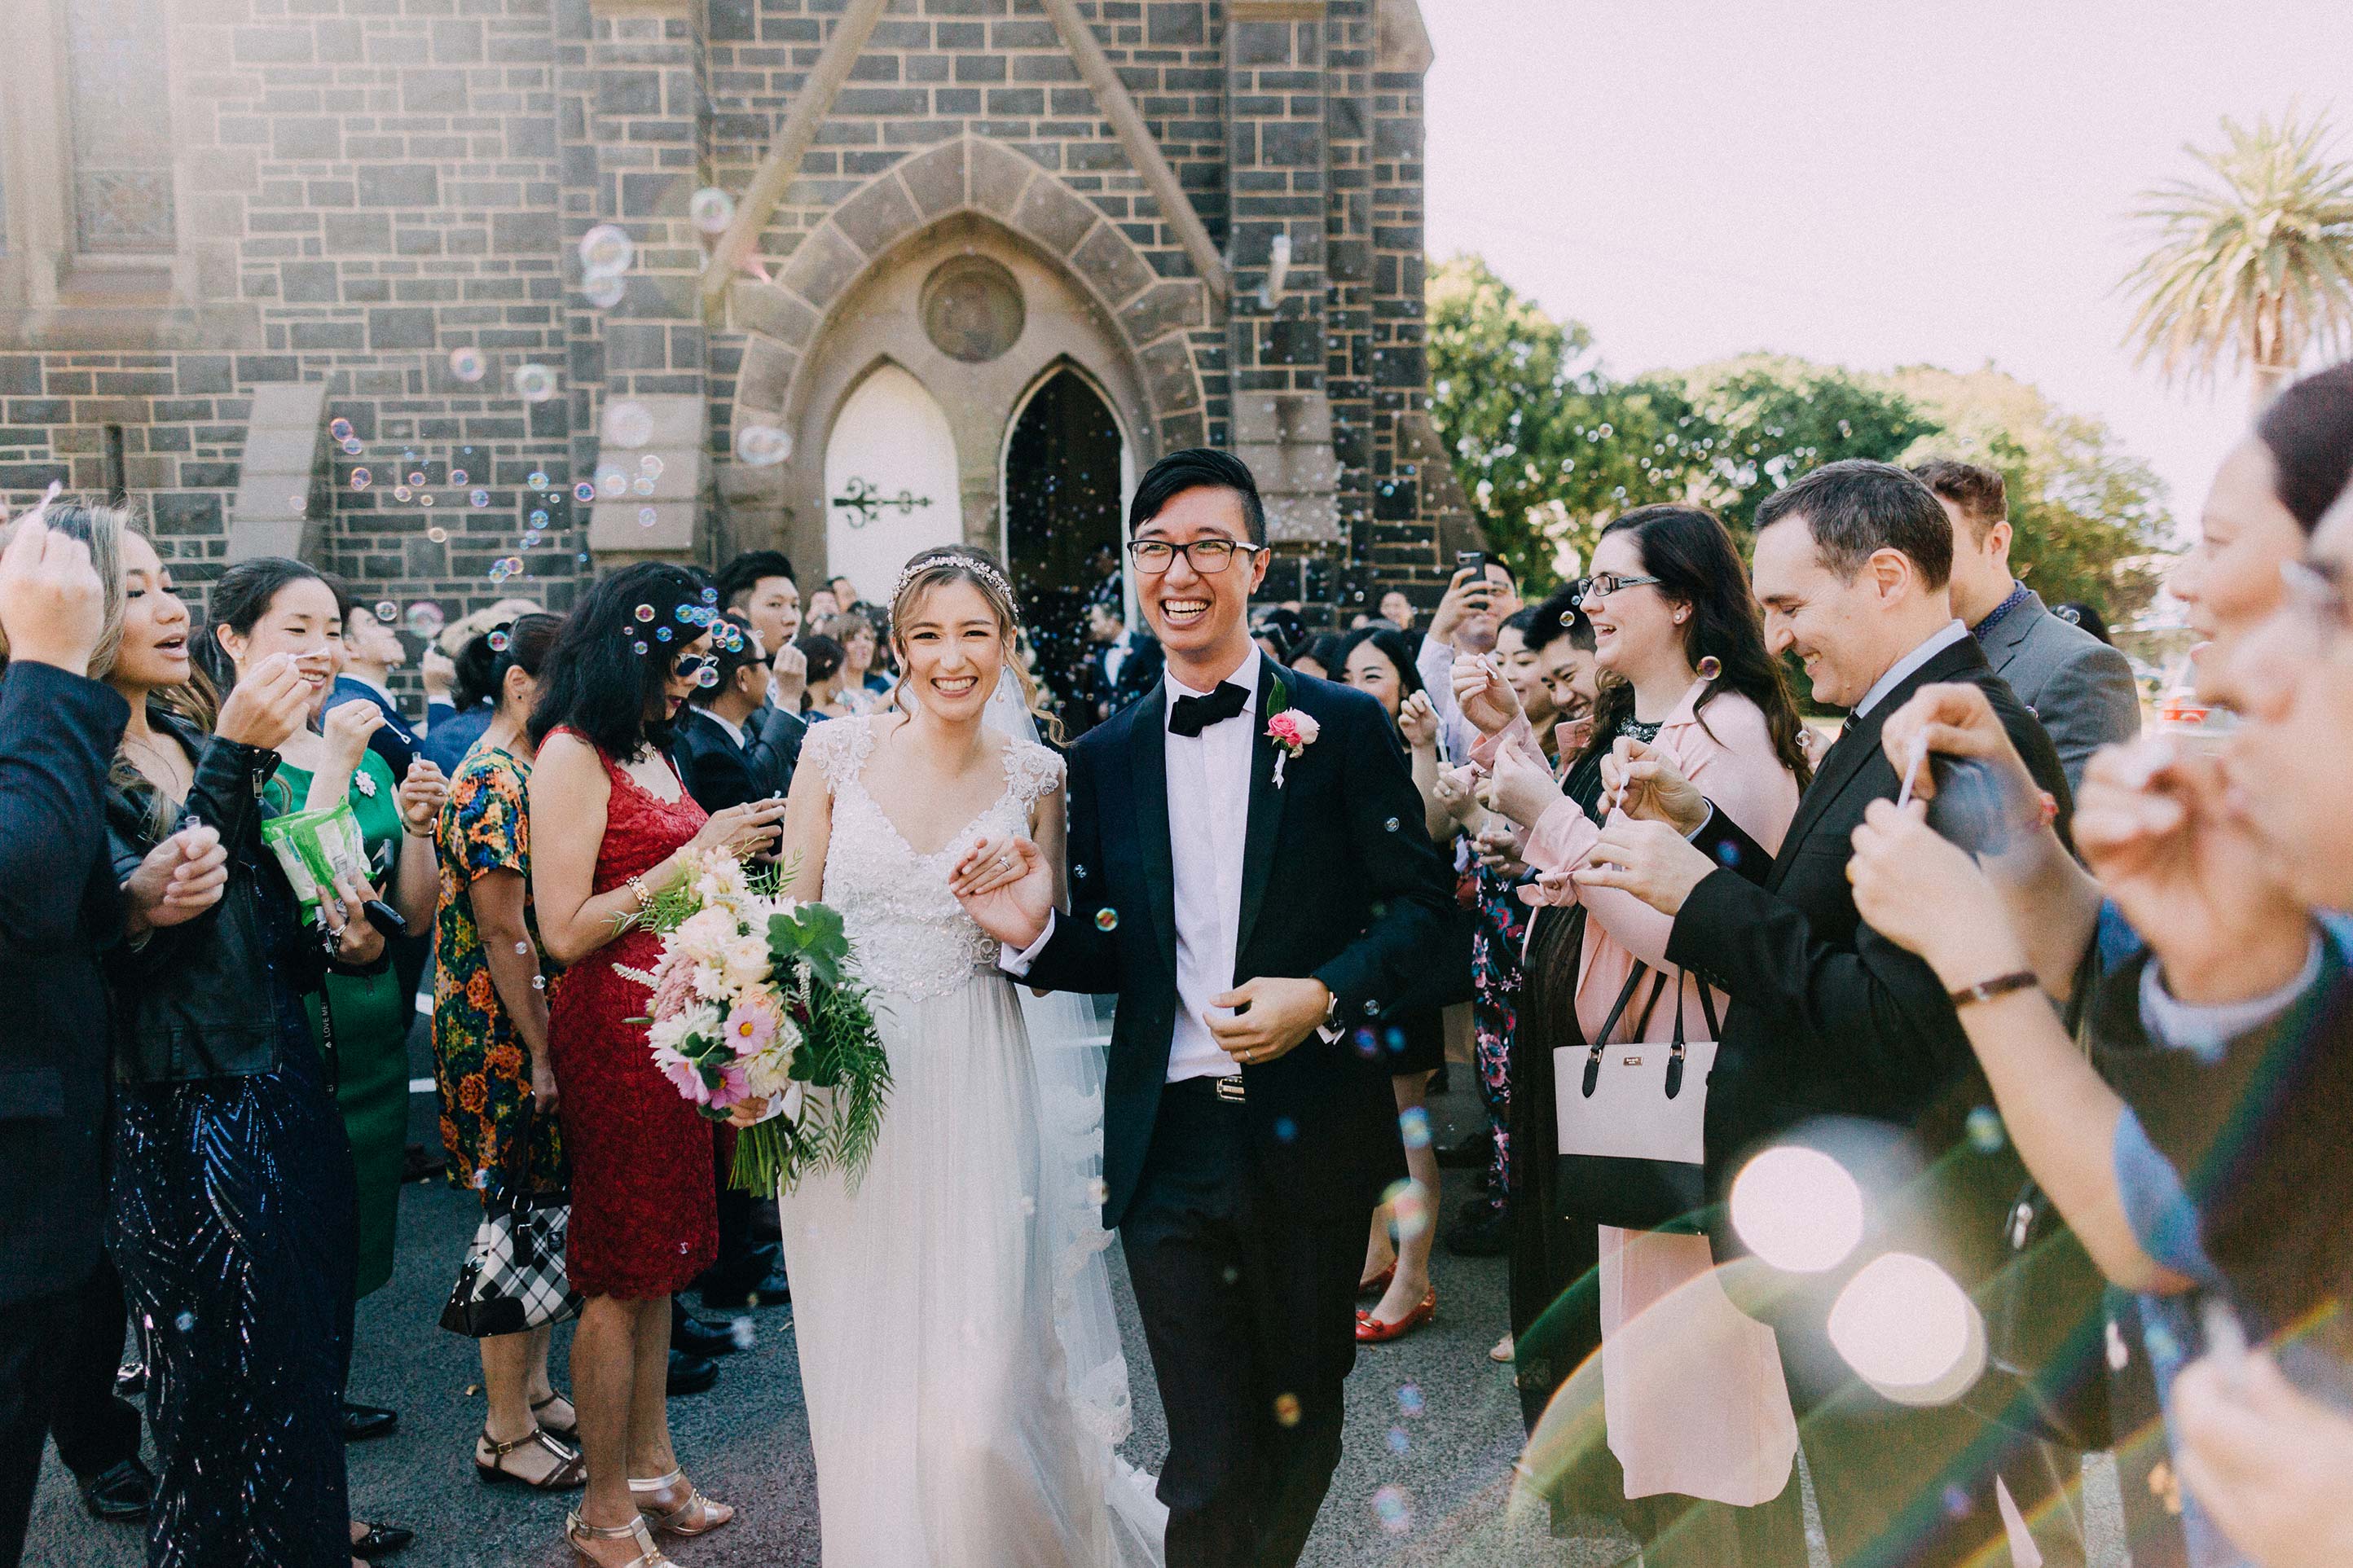 Melbourne-caufield-north-wedding-church-ceremony-exit-bubbles